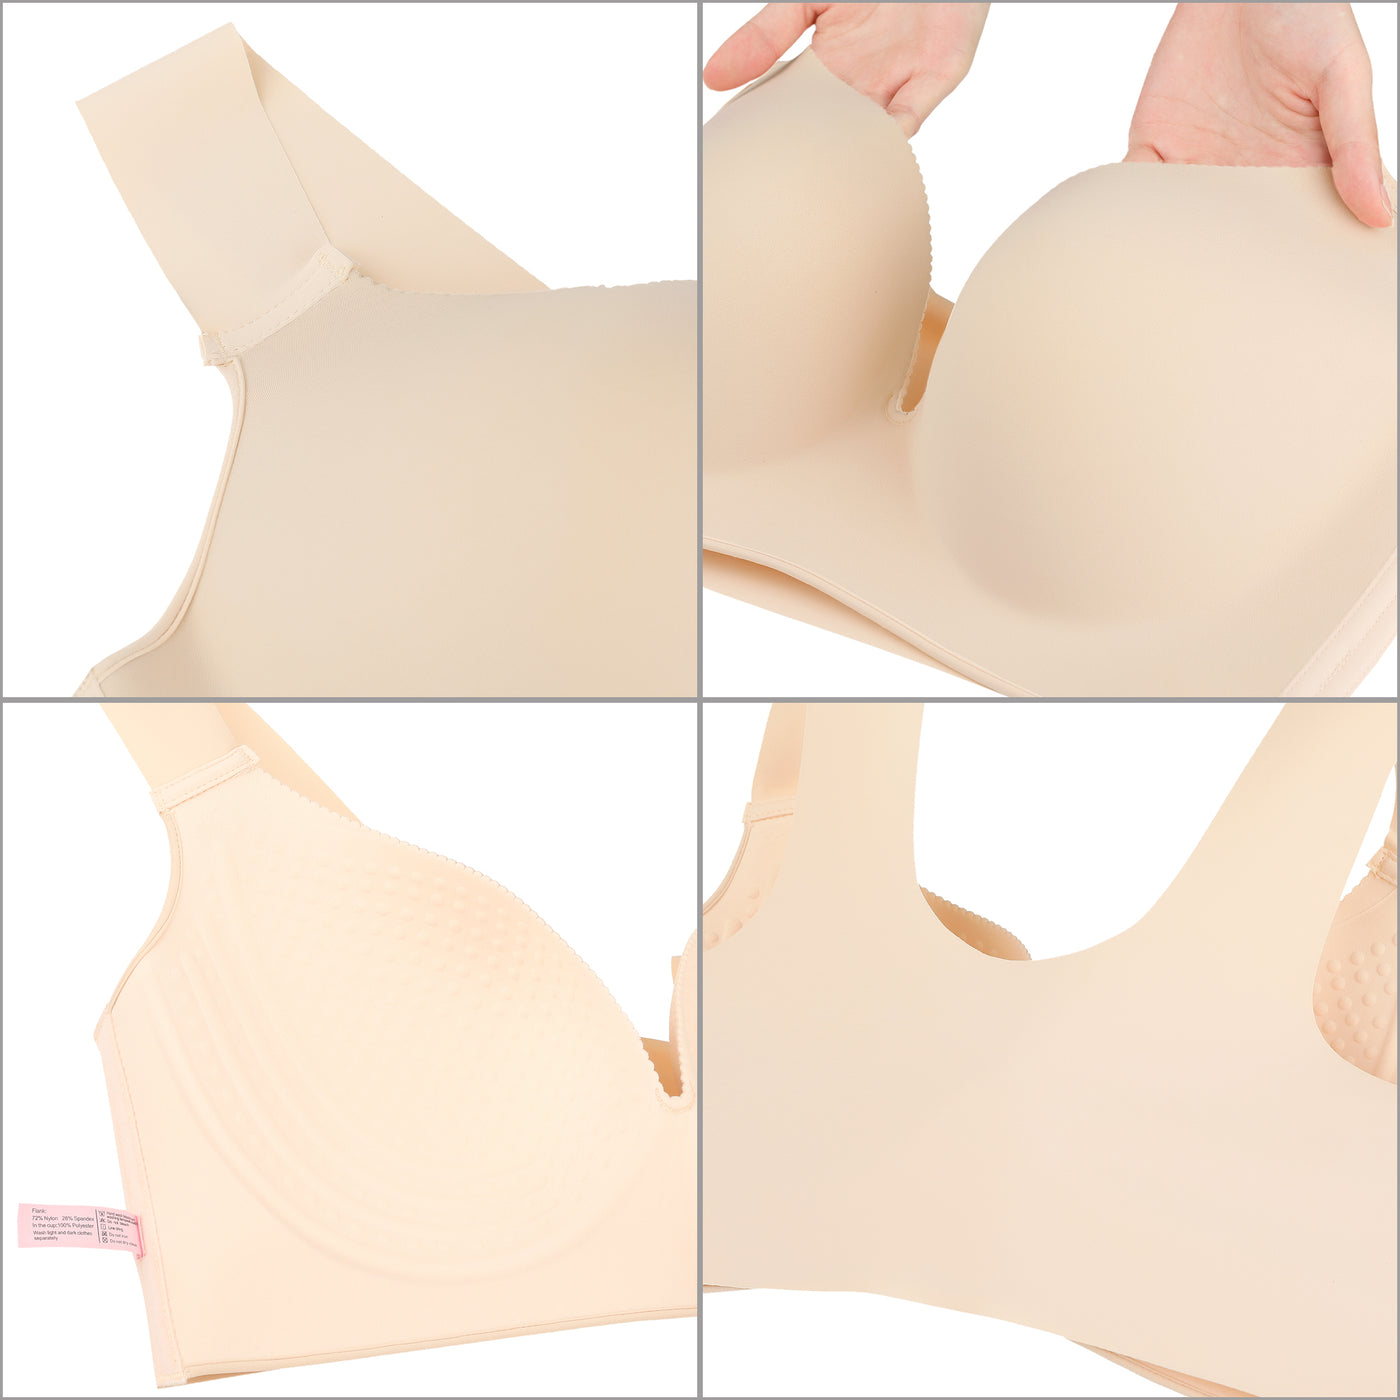 Bublédon Plus Size Bras for Women Full Figure Camisole Seamless Original Wirefree Support Bra